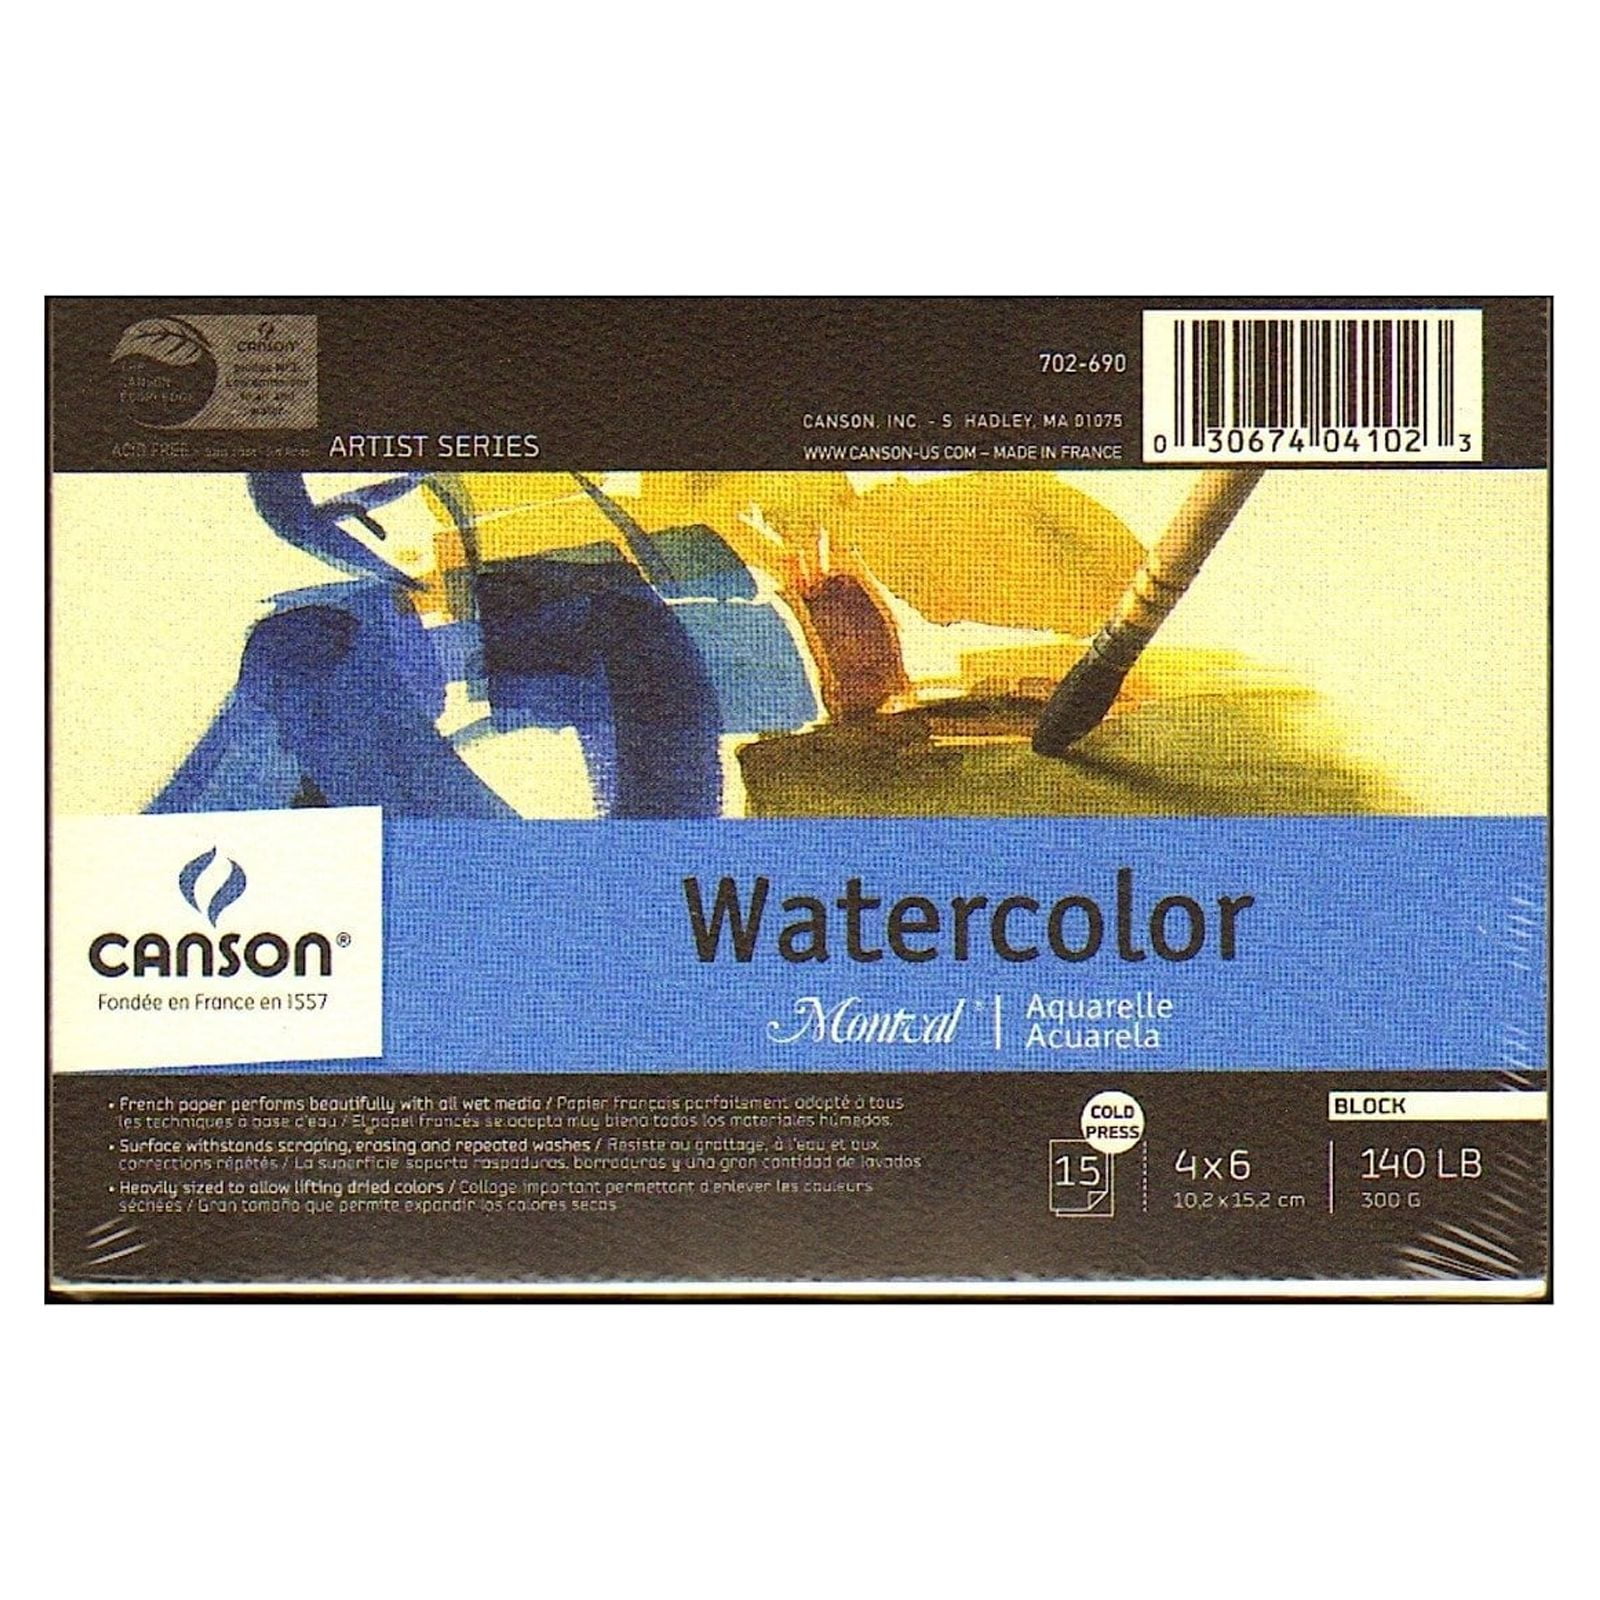 100% Cotton Watercolor Paper 140lb 8.3x11.2 60 Sheets Cold Press Acid Free